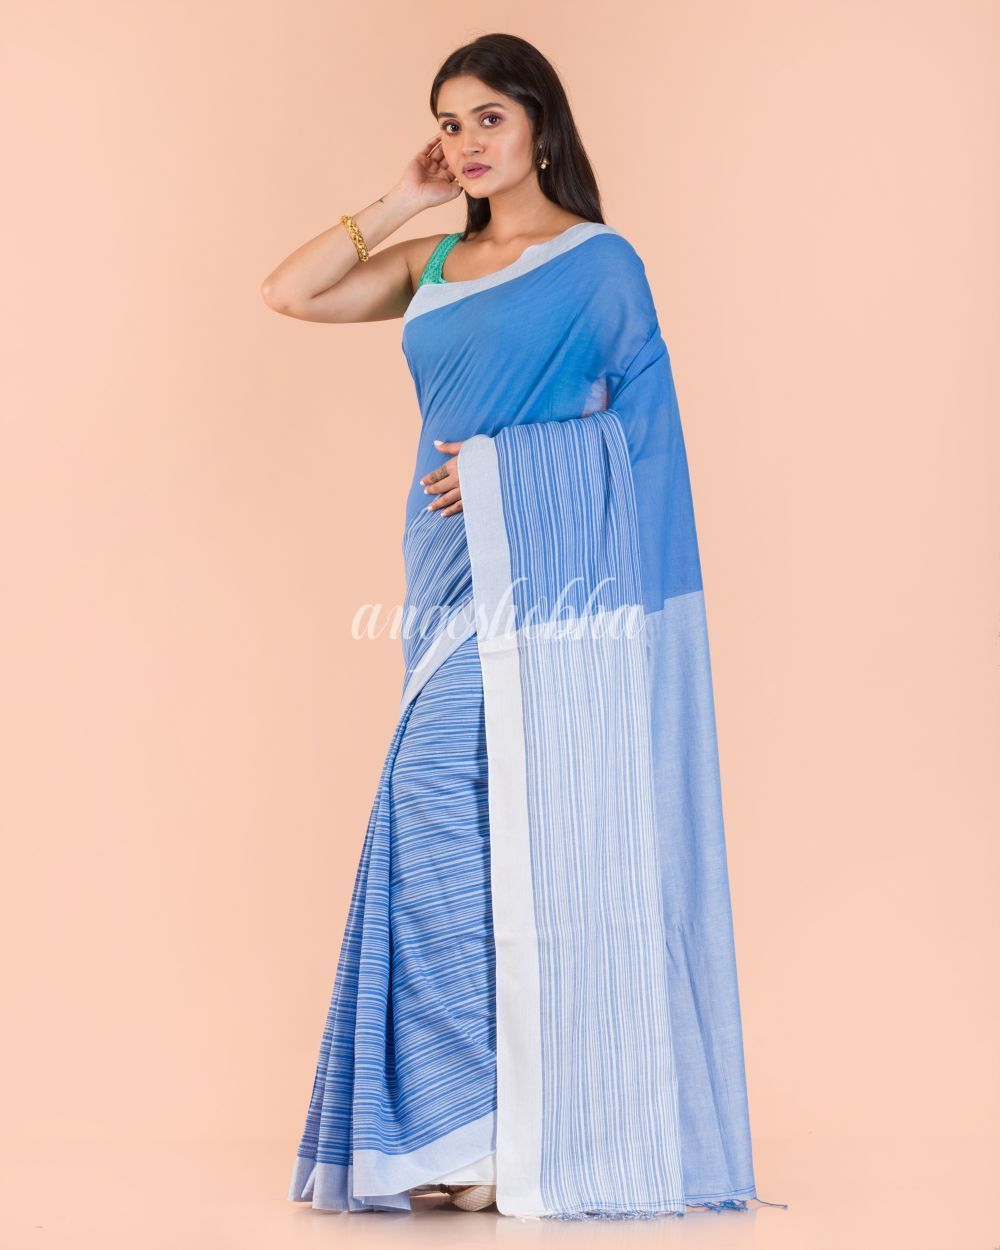 Women's Blue Handwoven Cotton Saree - Angoshobha